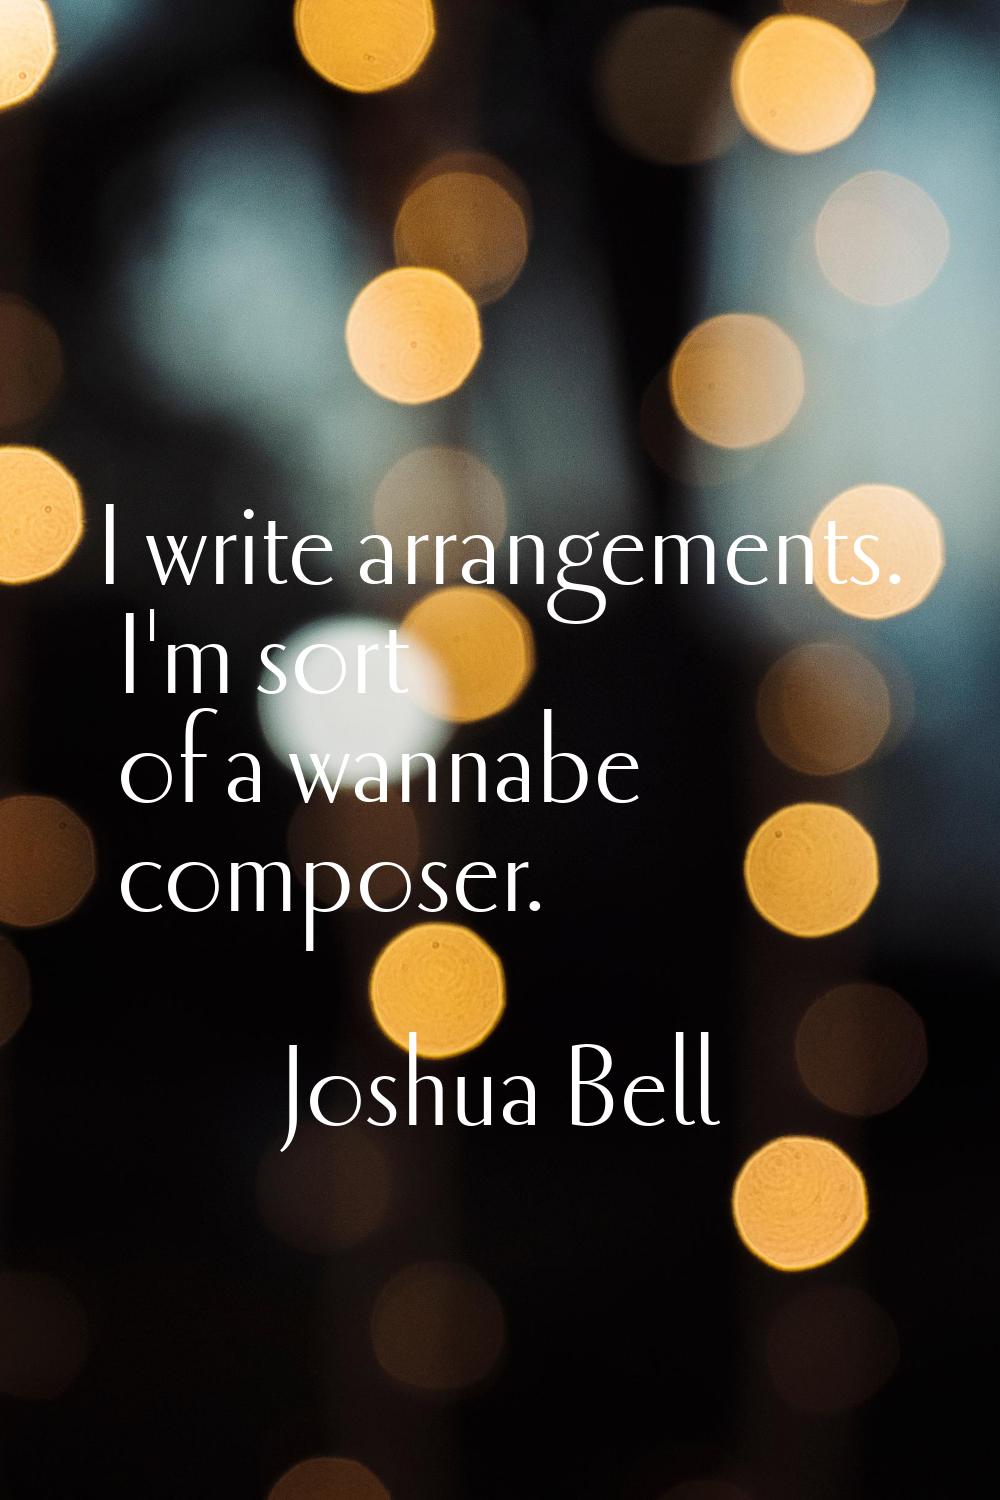 I write arrangements. I'm sort of a wannabe composer.